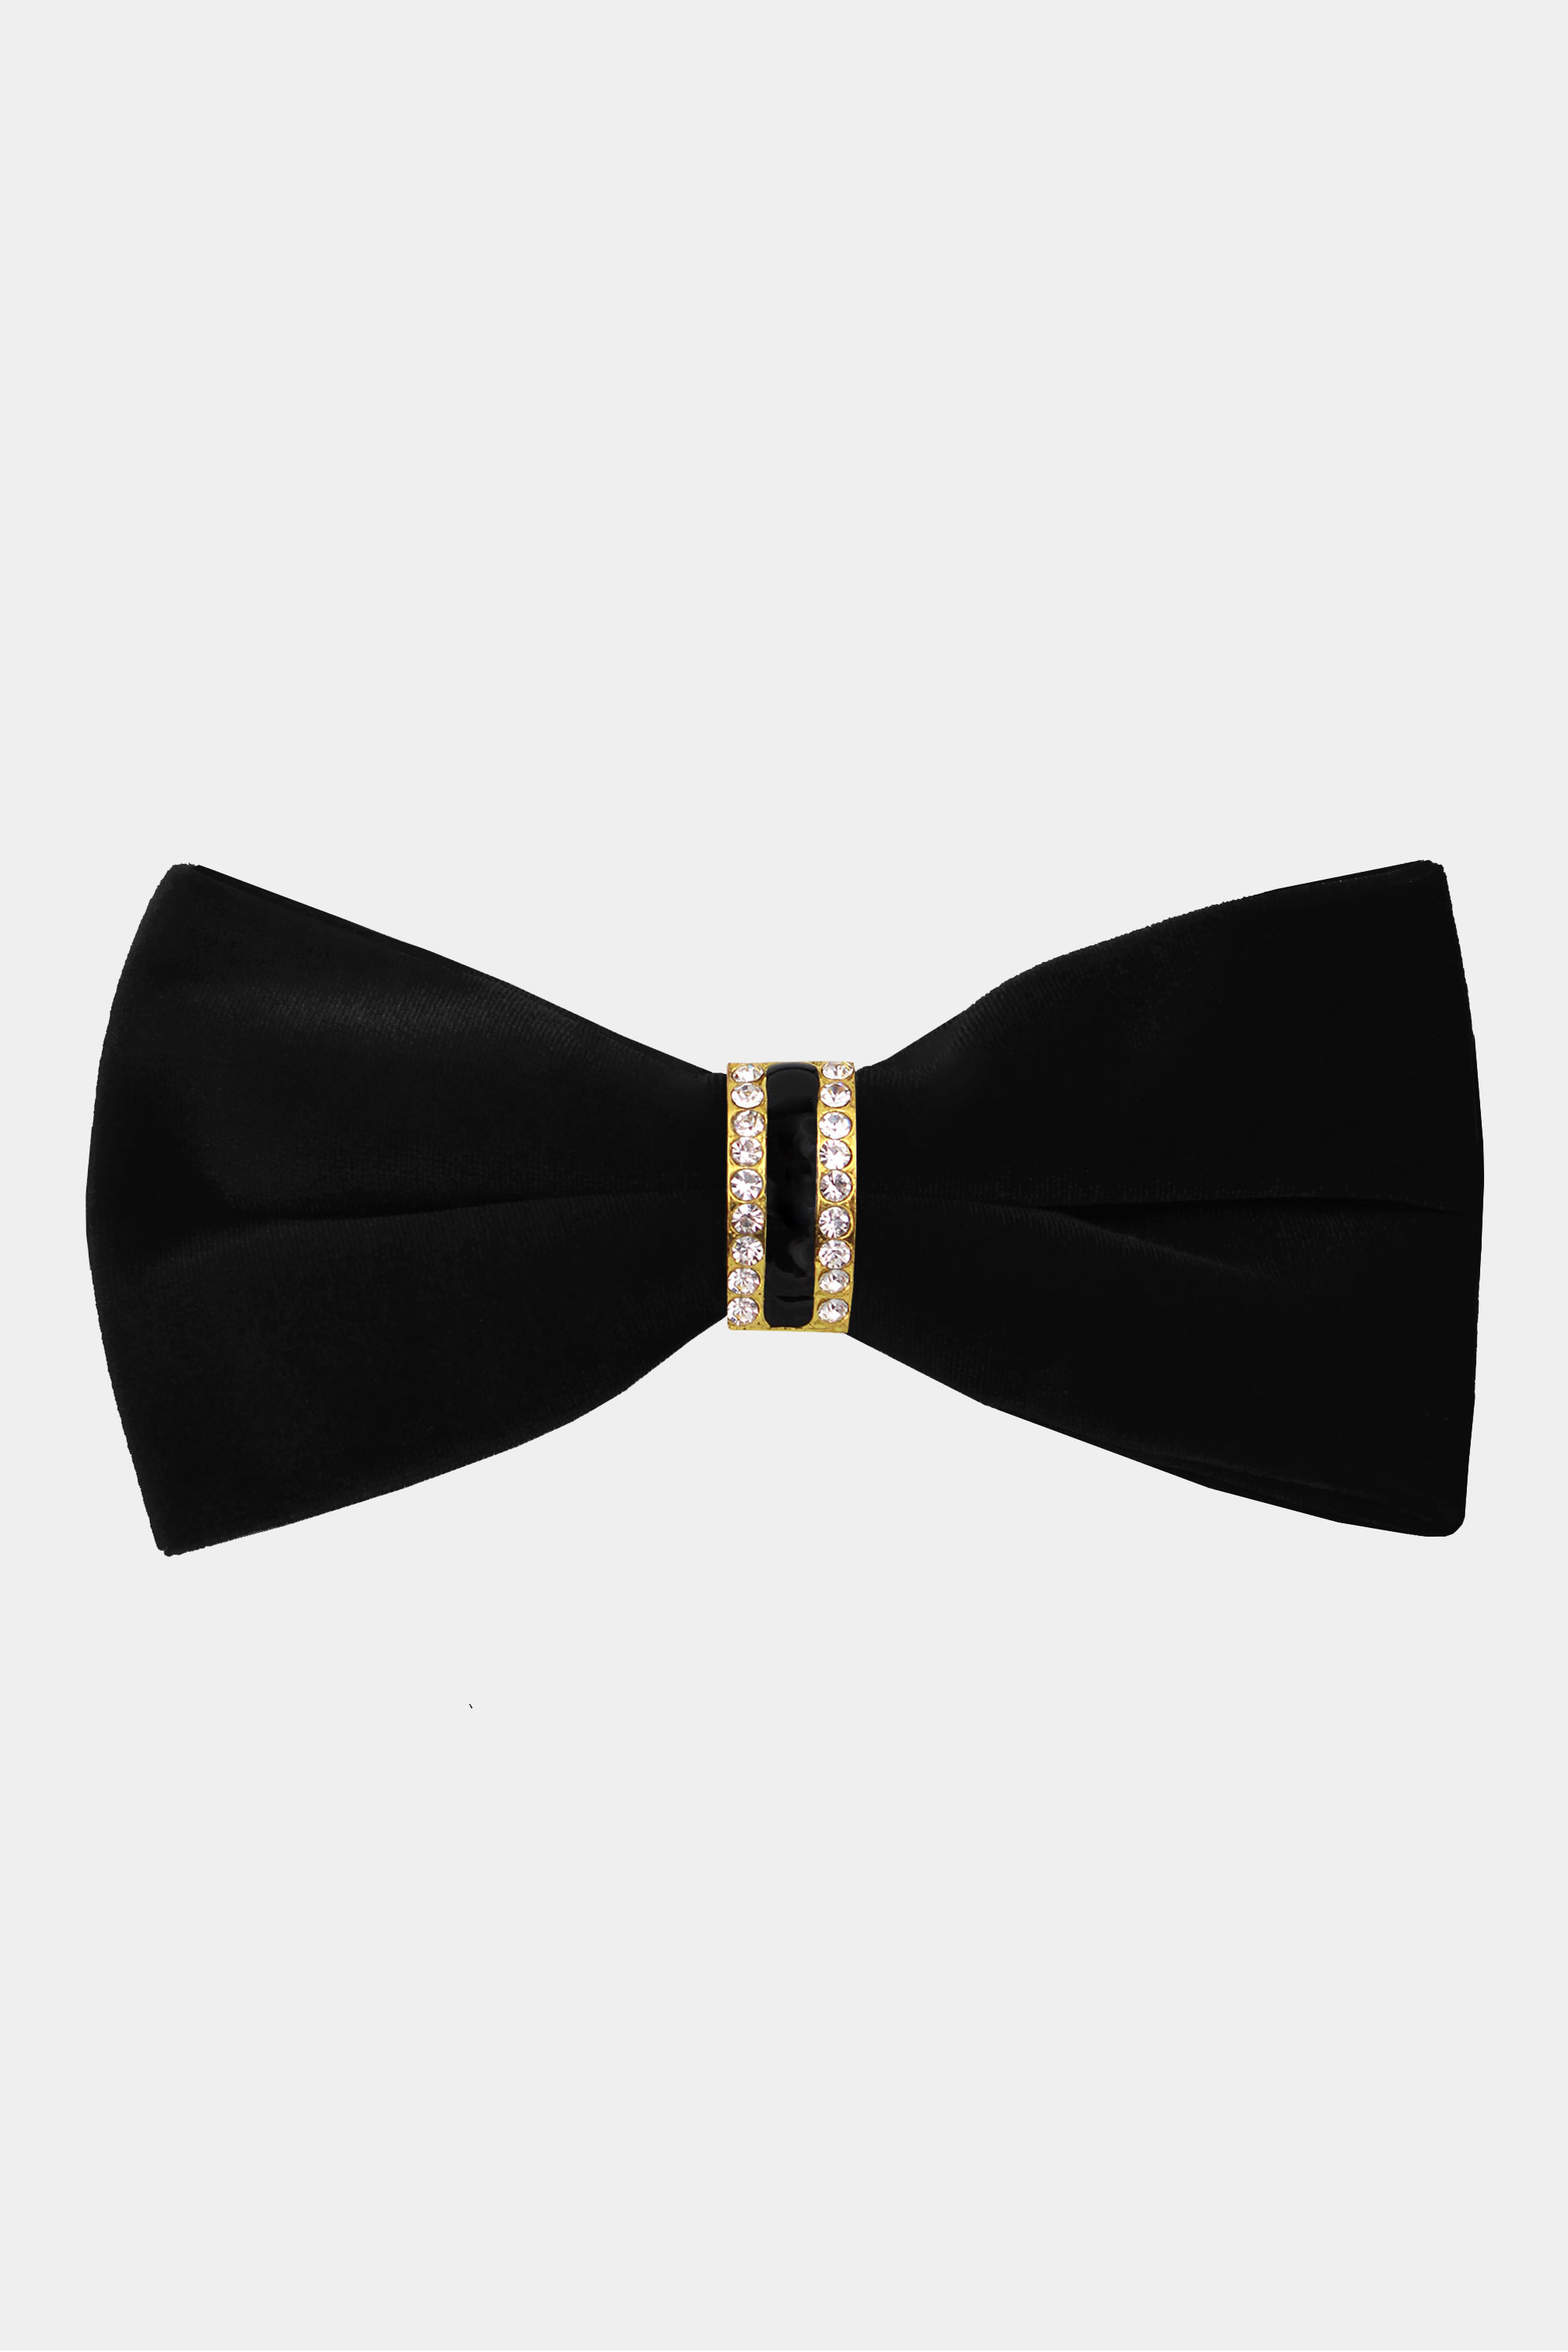 Black Velvet Tuxedo Bow Tie With Silver Sparkle Black 